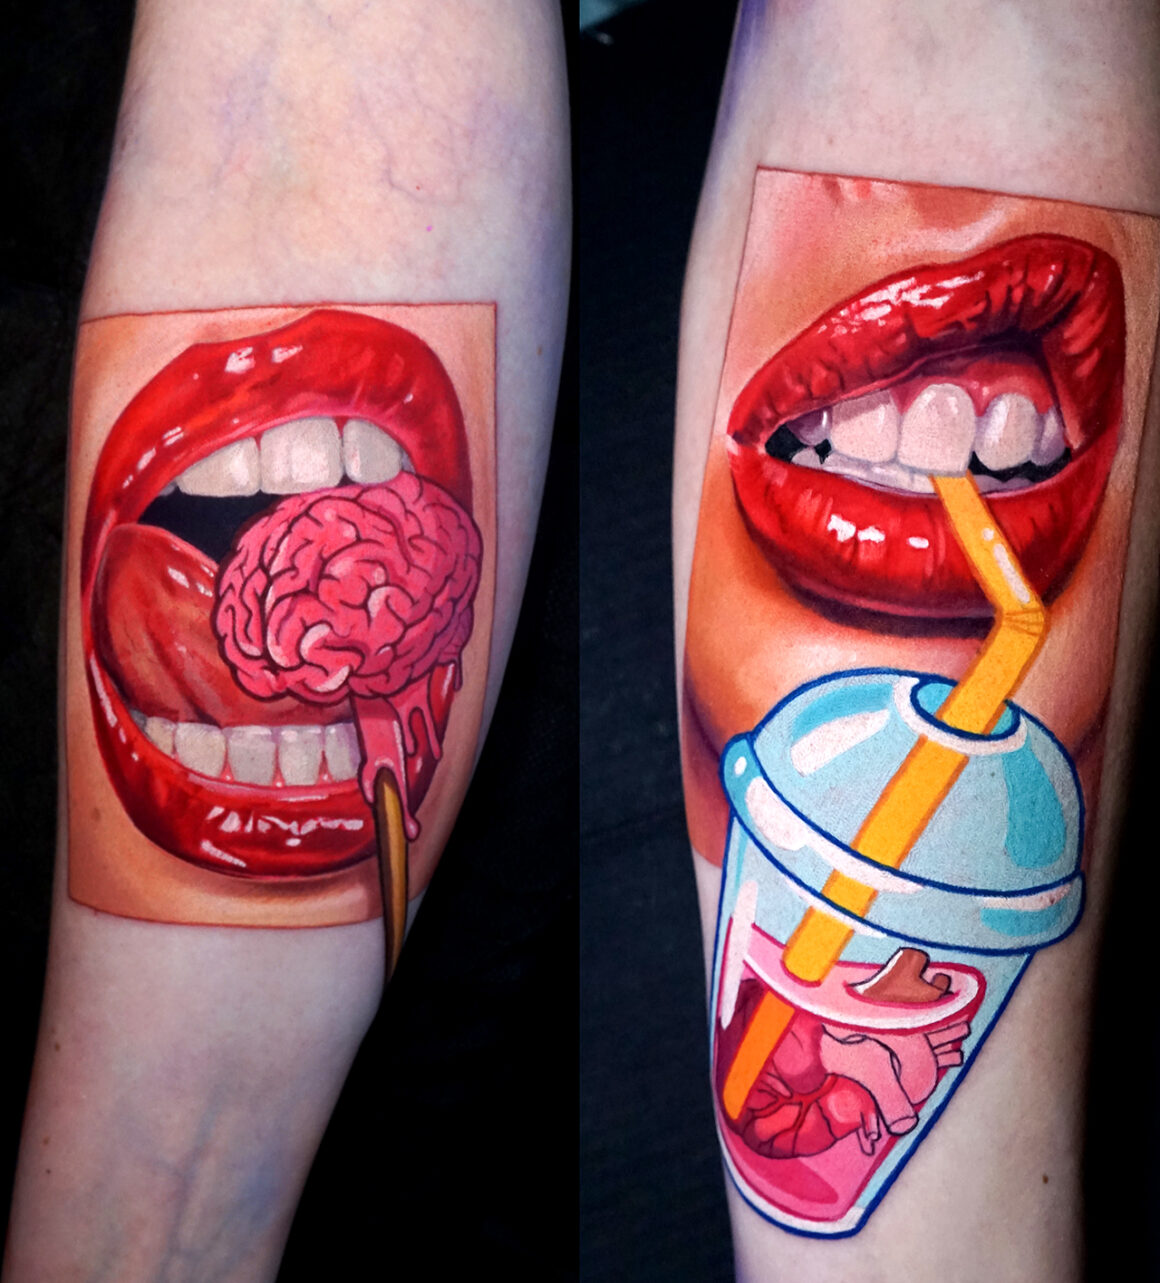 Tattoo by Daria Pirojenco